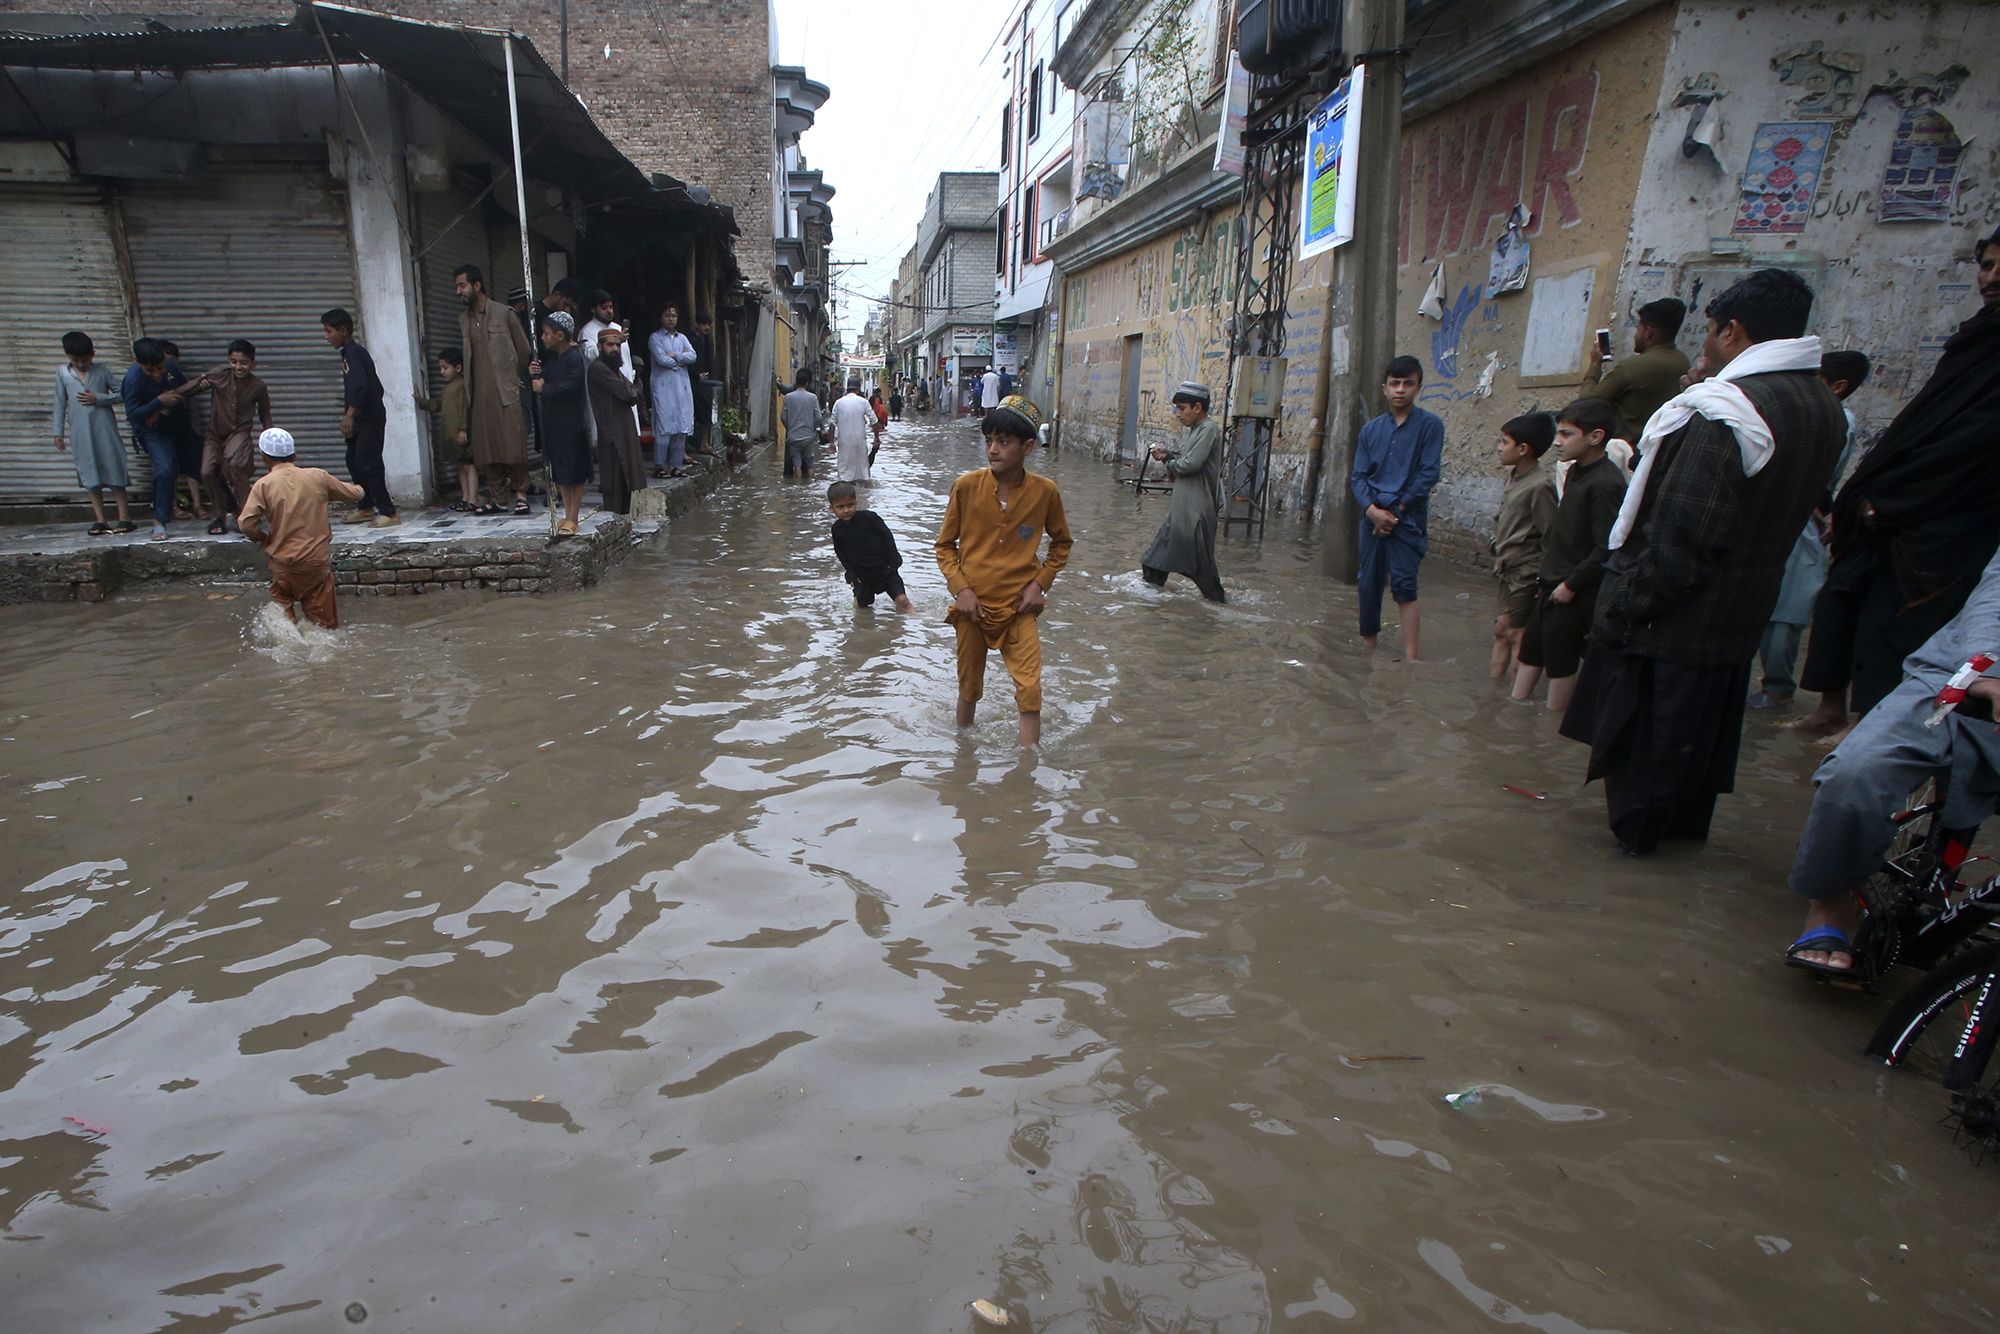 People wade through a street flooded by heavy rain in Peshawar, Pakistan on Monday, April 15.
Manda...